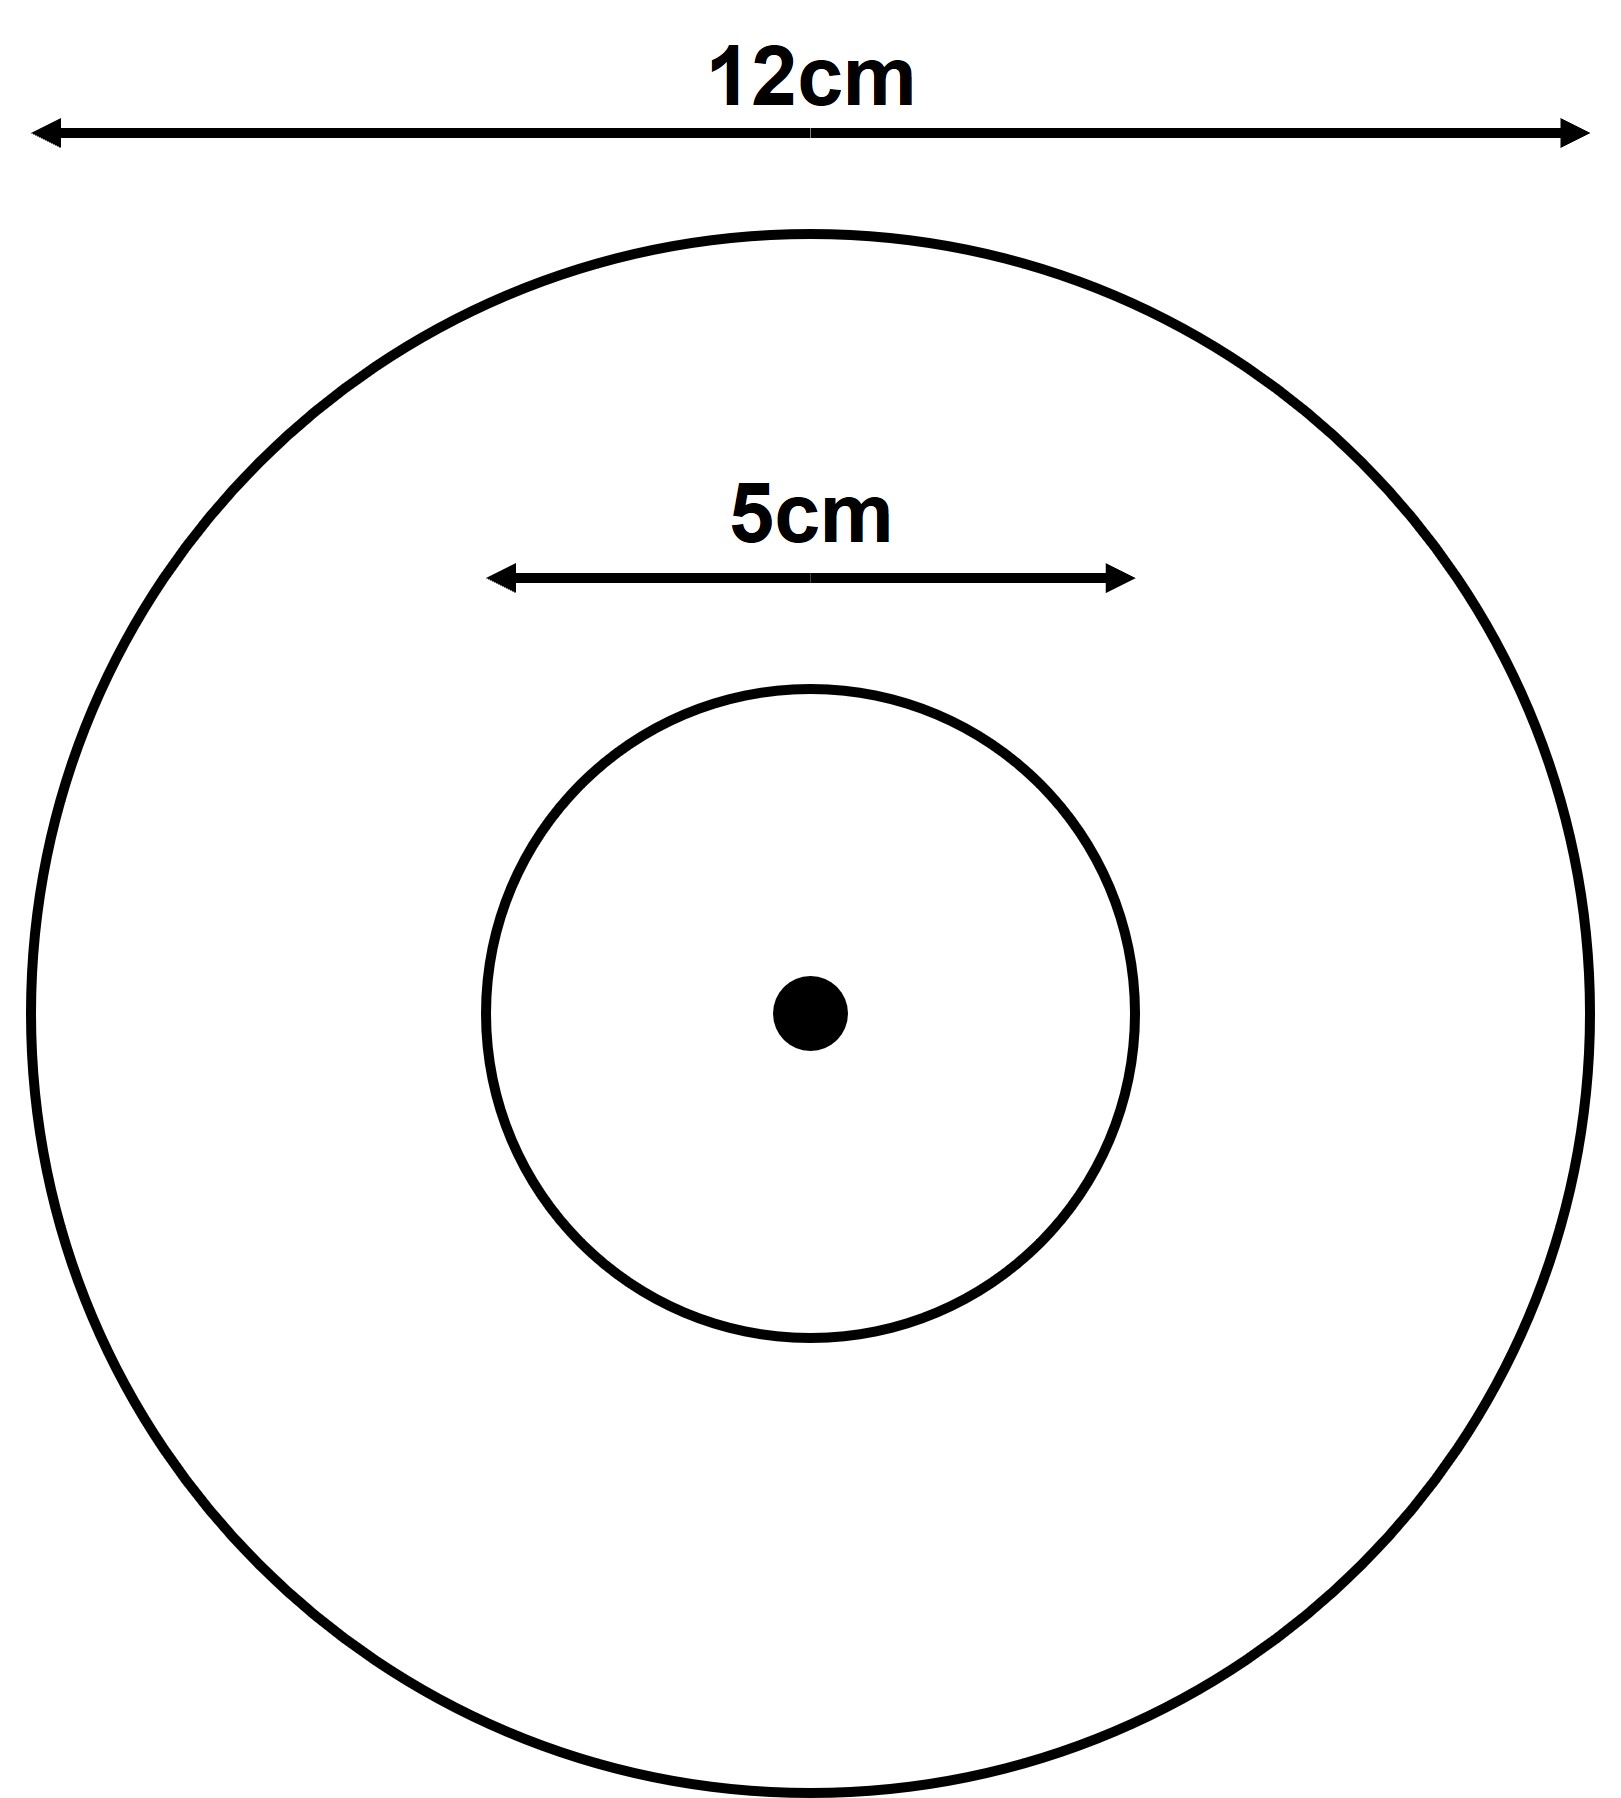 An illustration of the design described in step 2